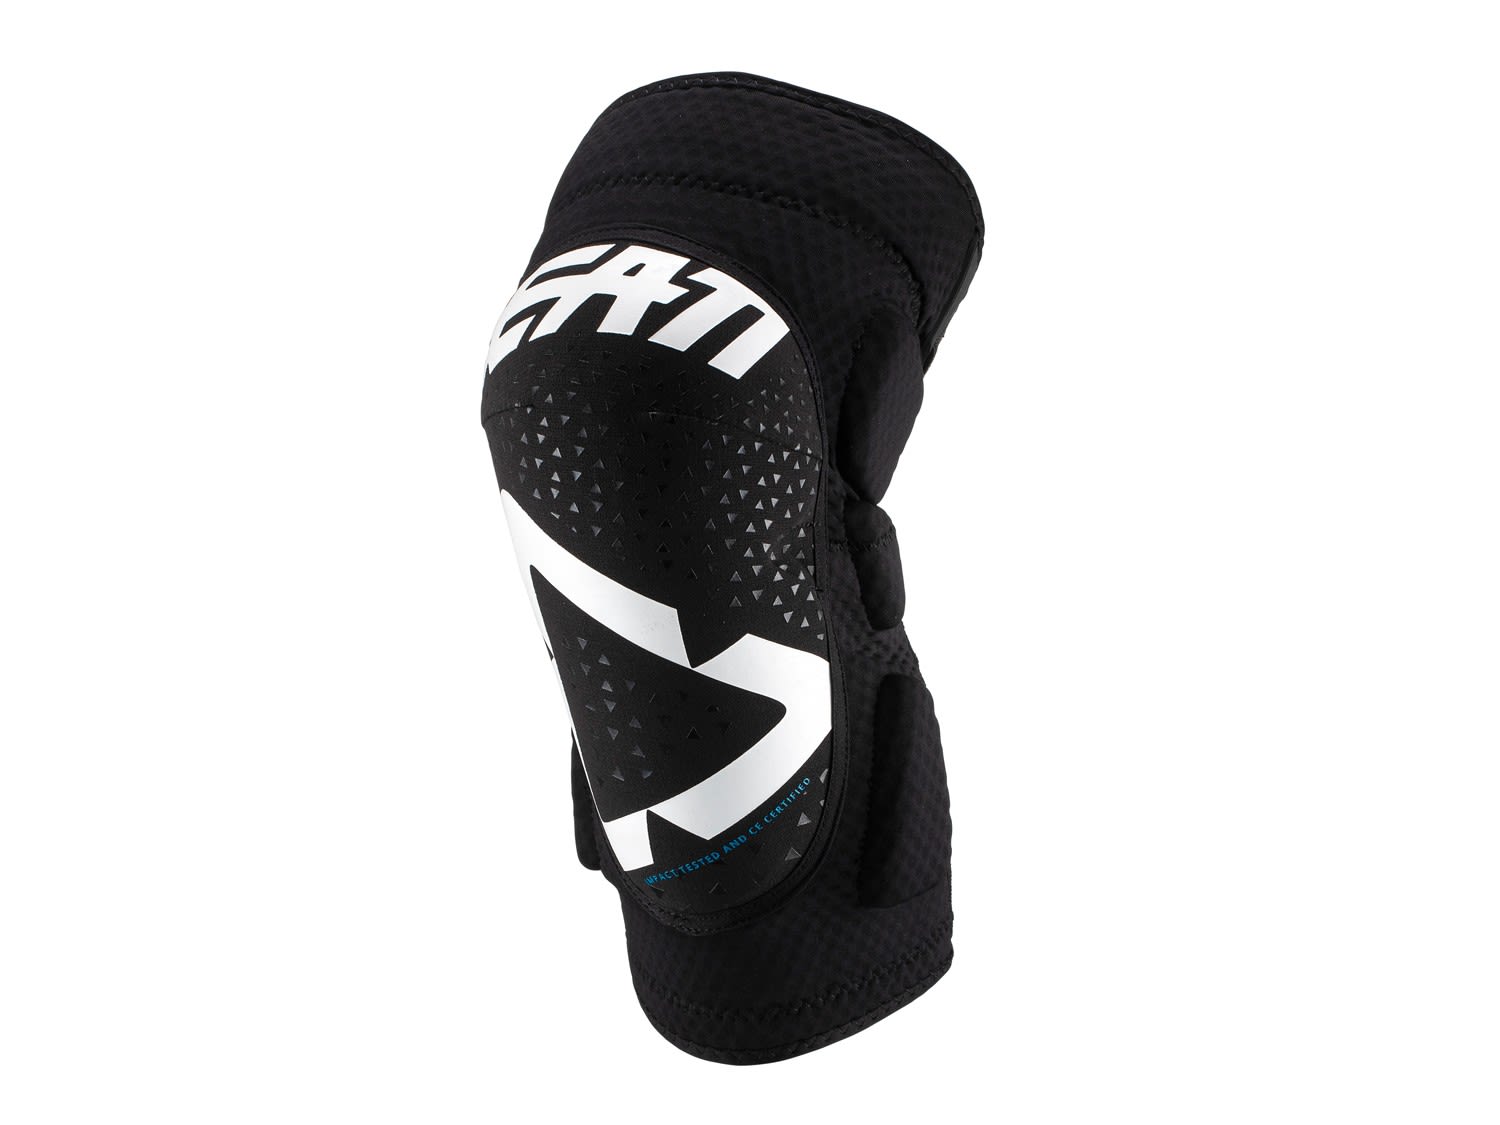 Leatt Knee Guard Junior 3DF 5-0 Schwarz- Knieprotektoren- Grsse One Size - Farbe White - Black unter Leatt